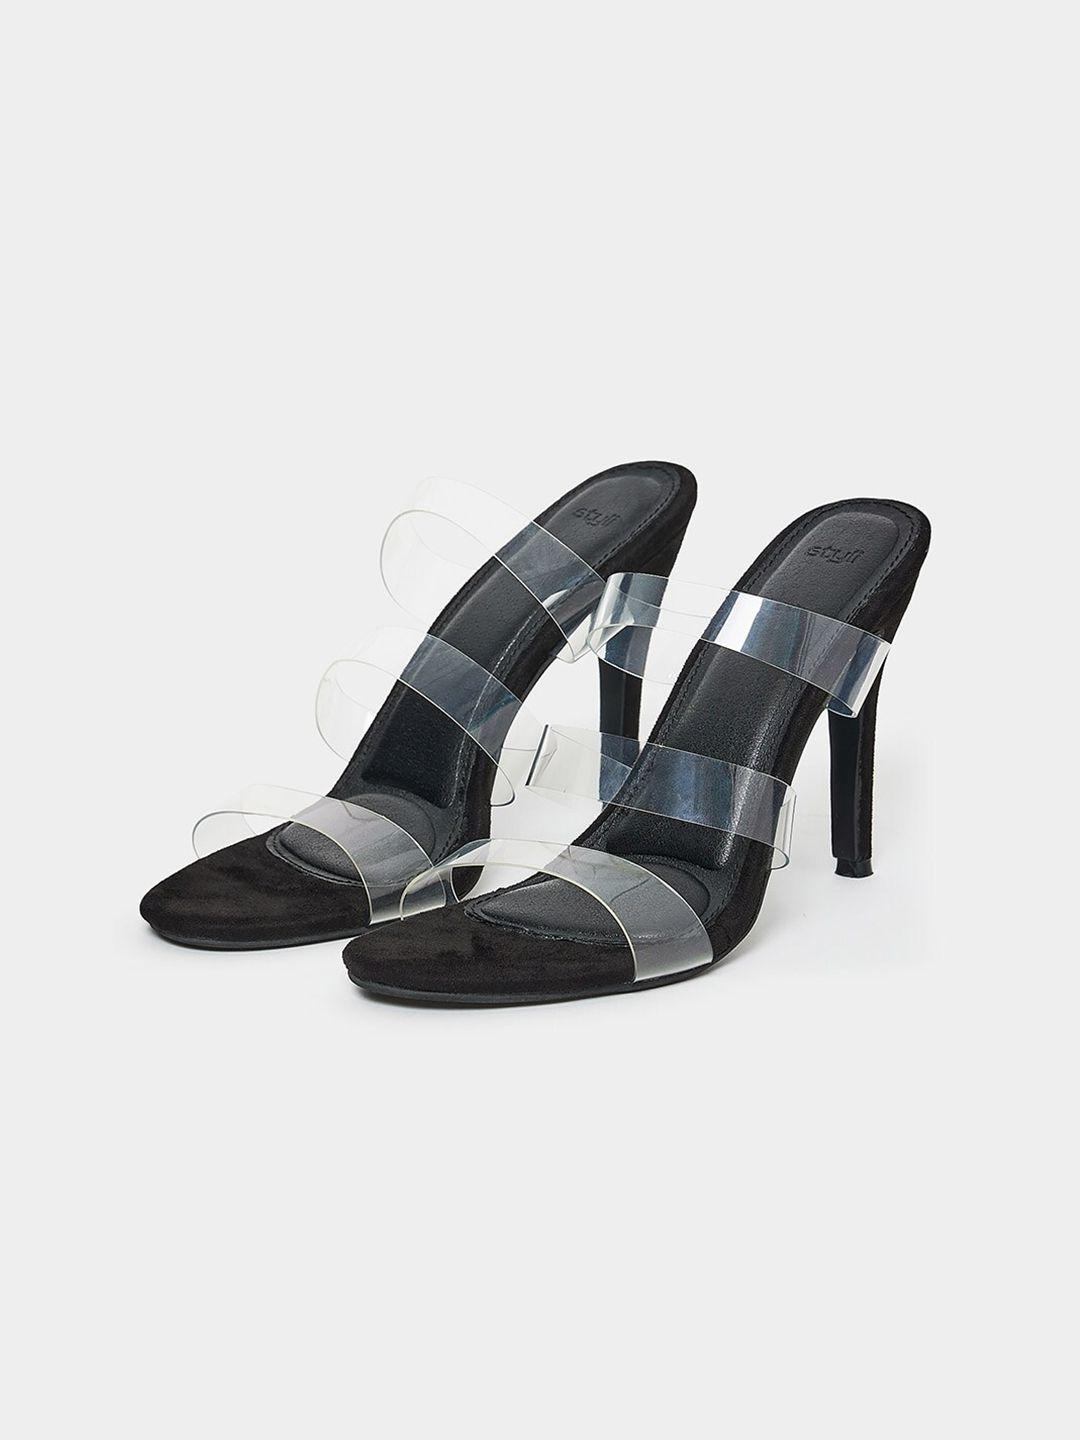 styli-black-&-transparent-strappy-open-toe-stiletto-heels